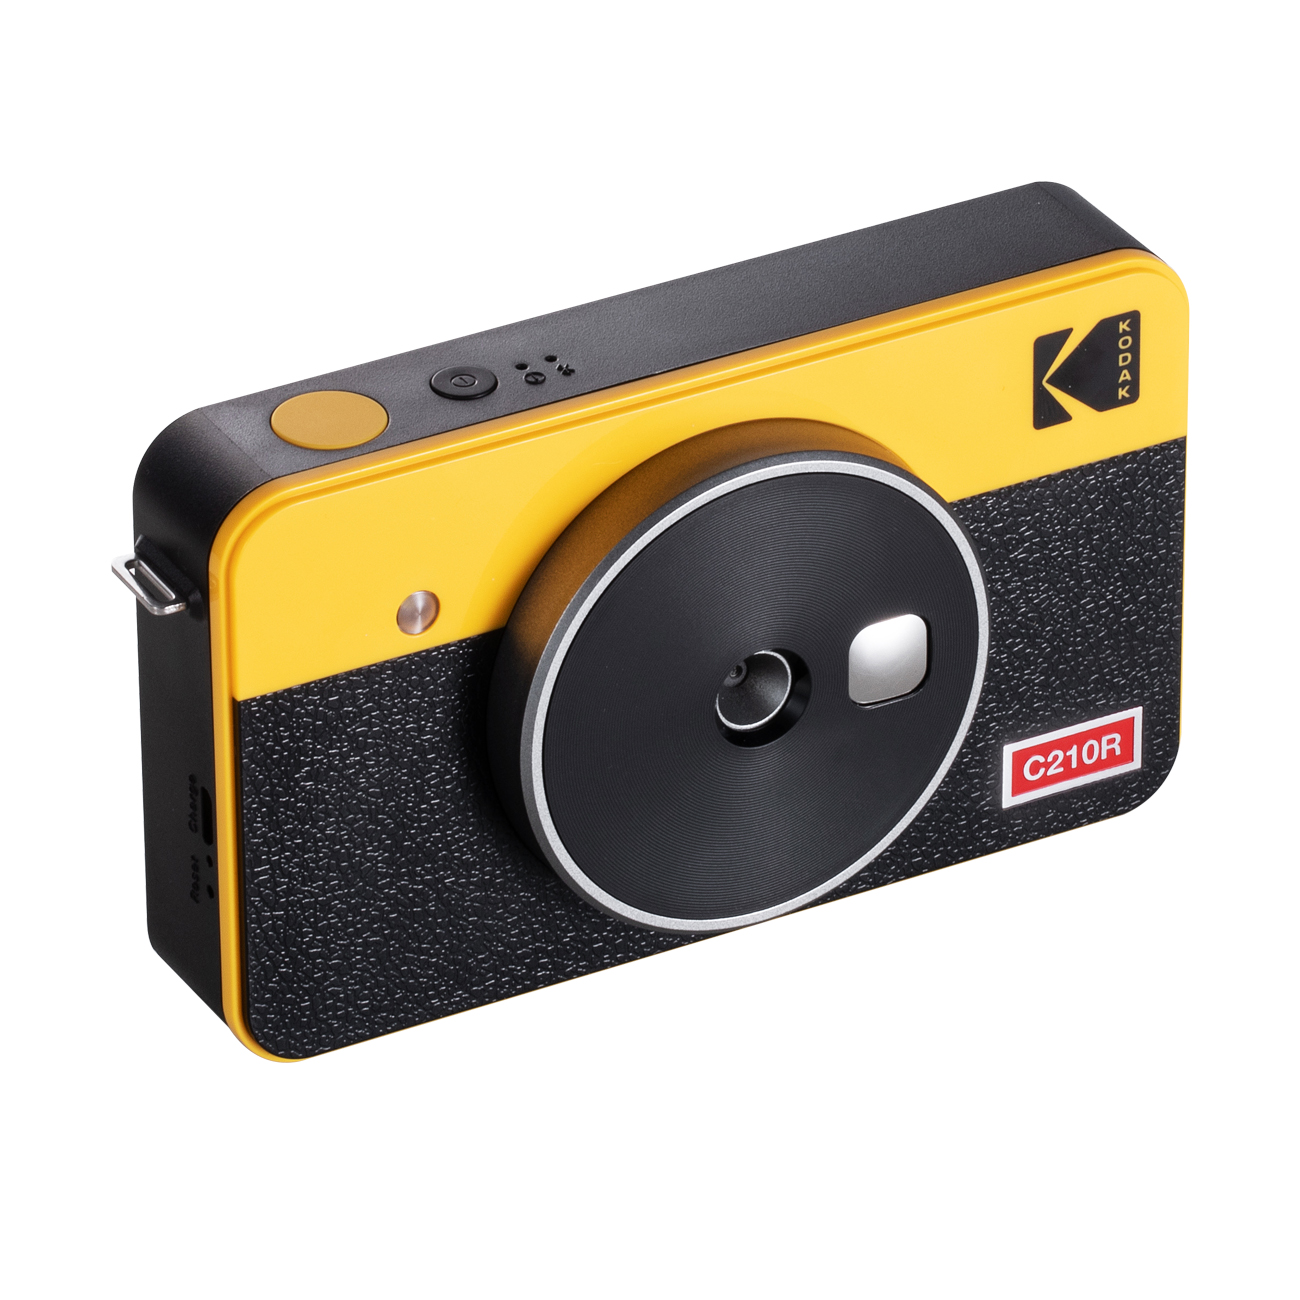 Kodak Mini Shot2 Retro 4Pass 2in1 Kamera & Drucker retail